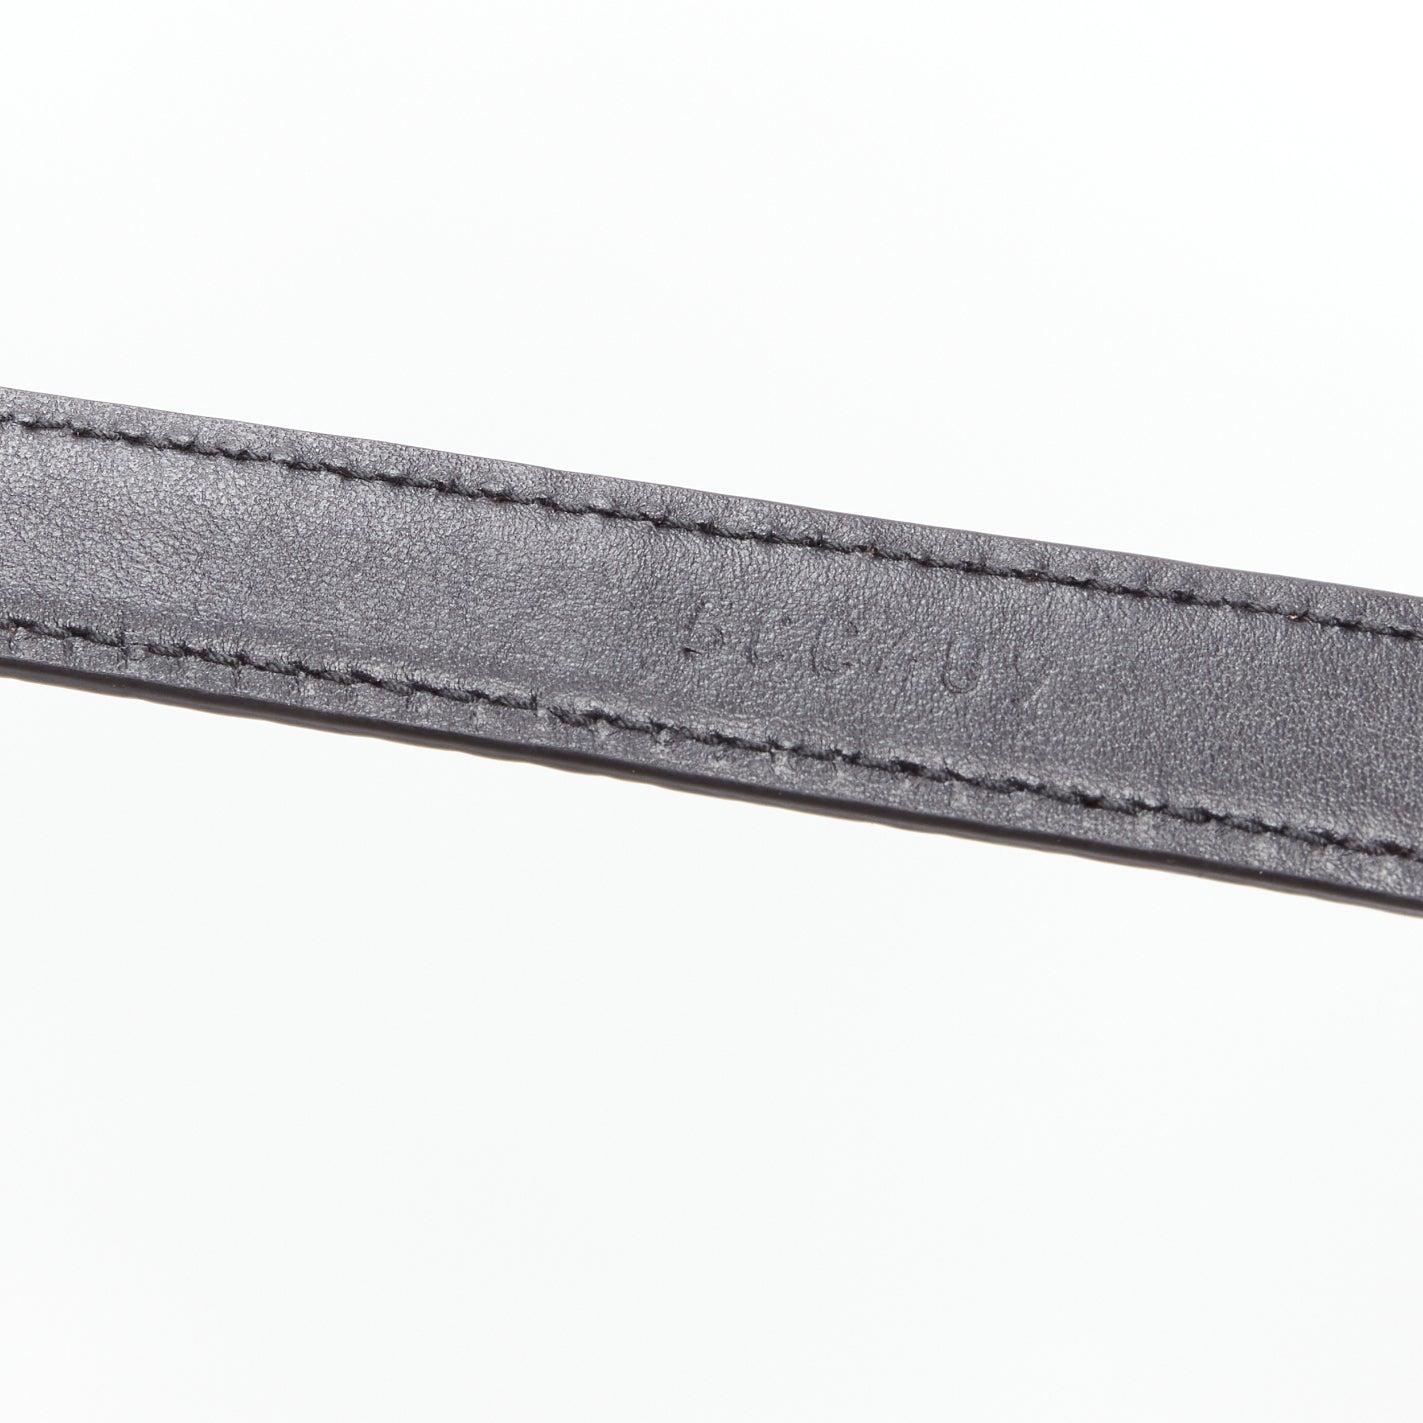 MIU MIU clear oversized crystal buckle black leather skinny belt 30